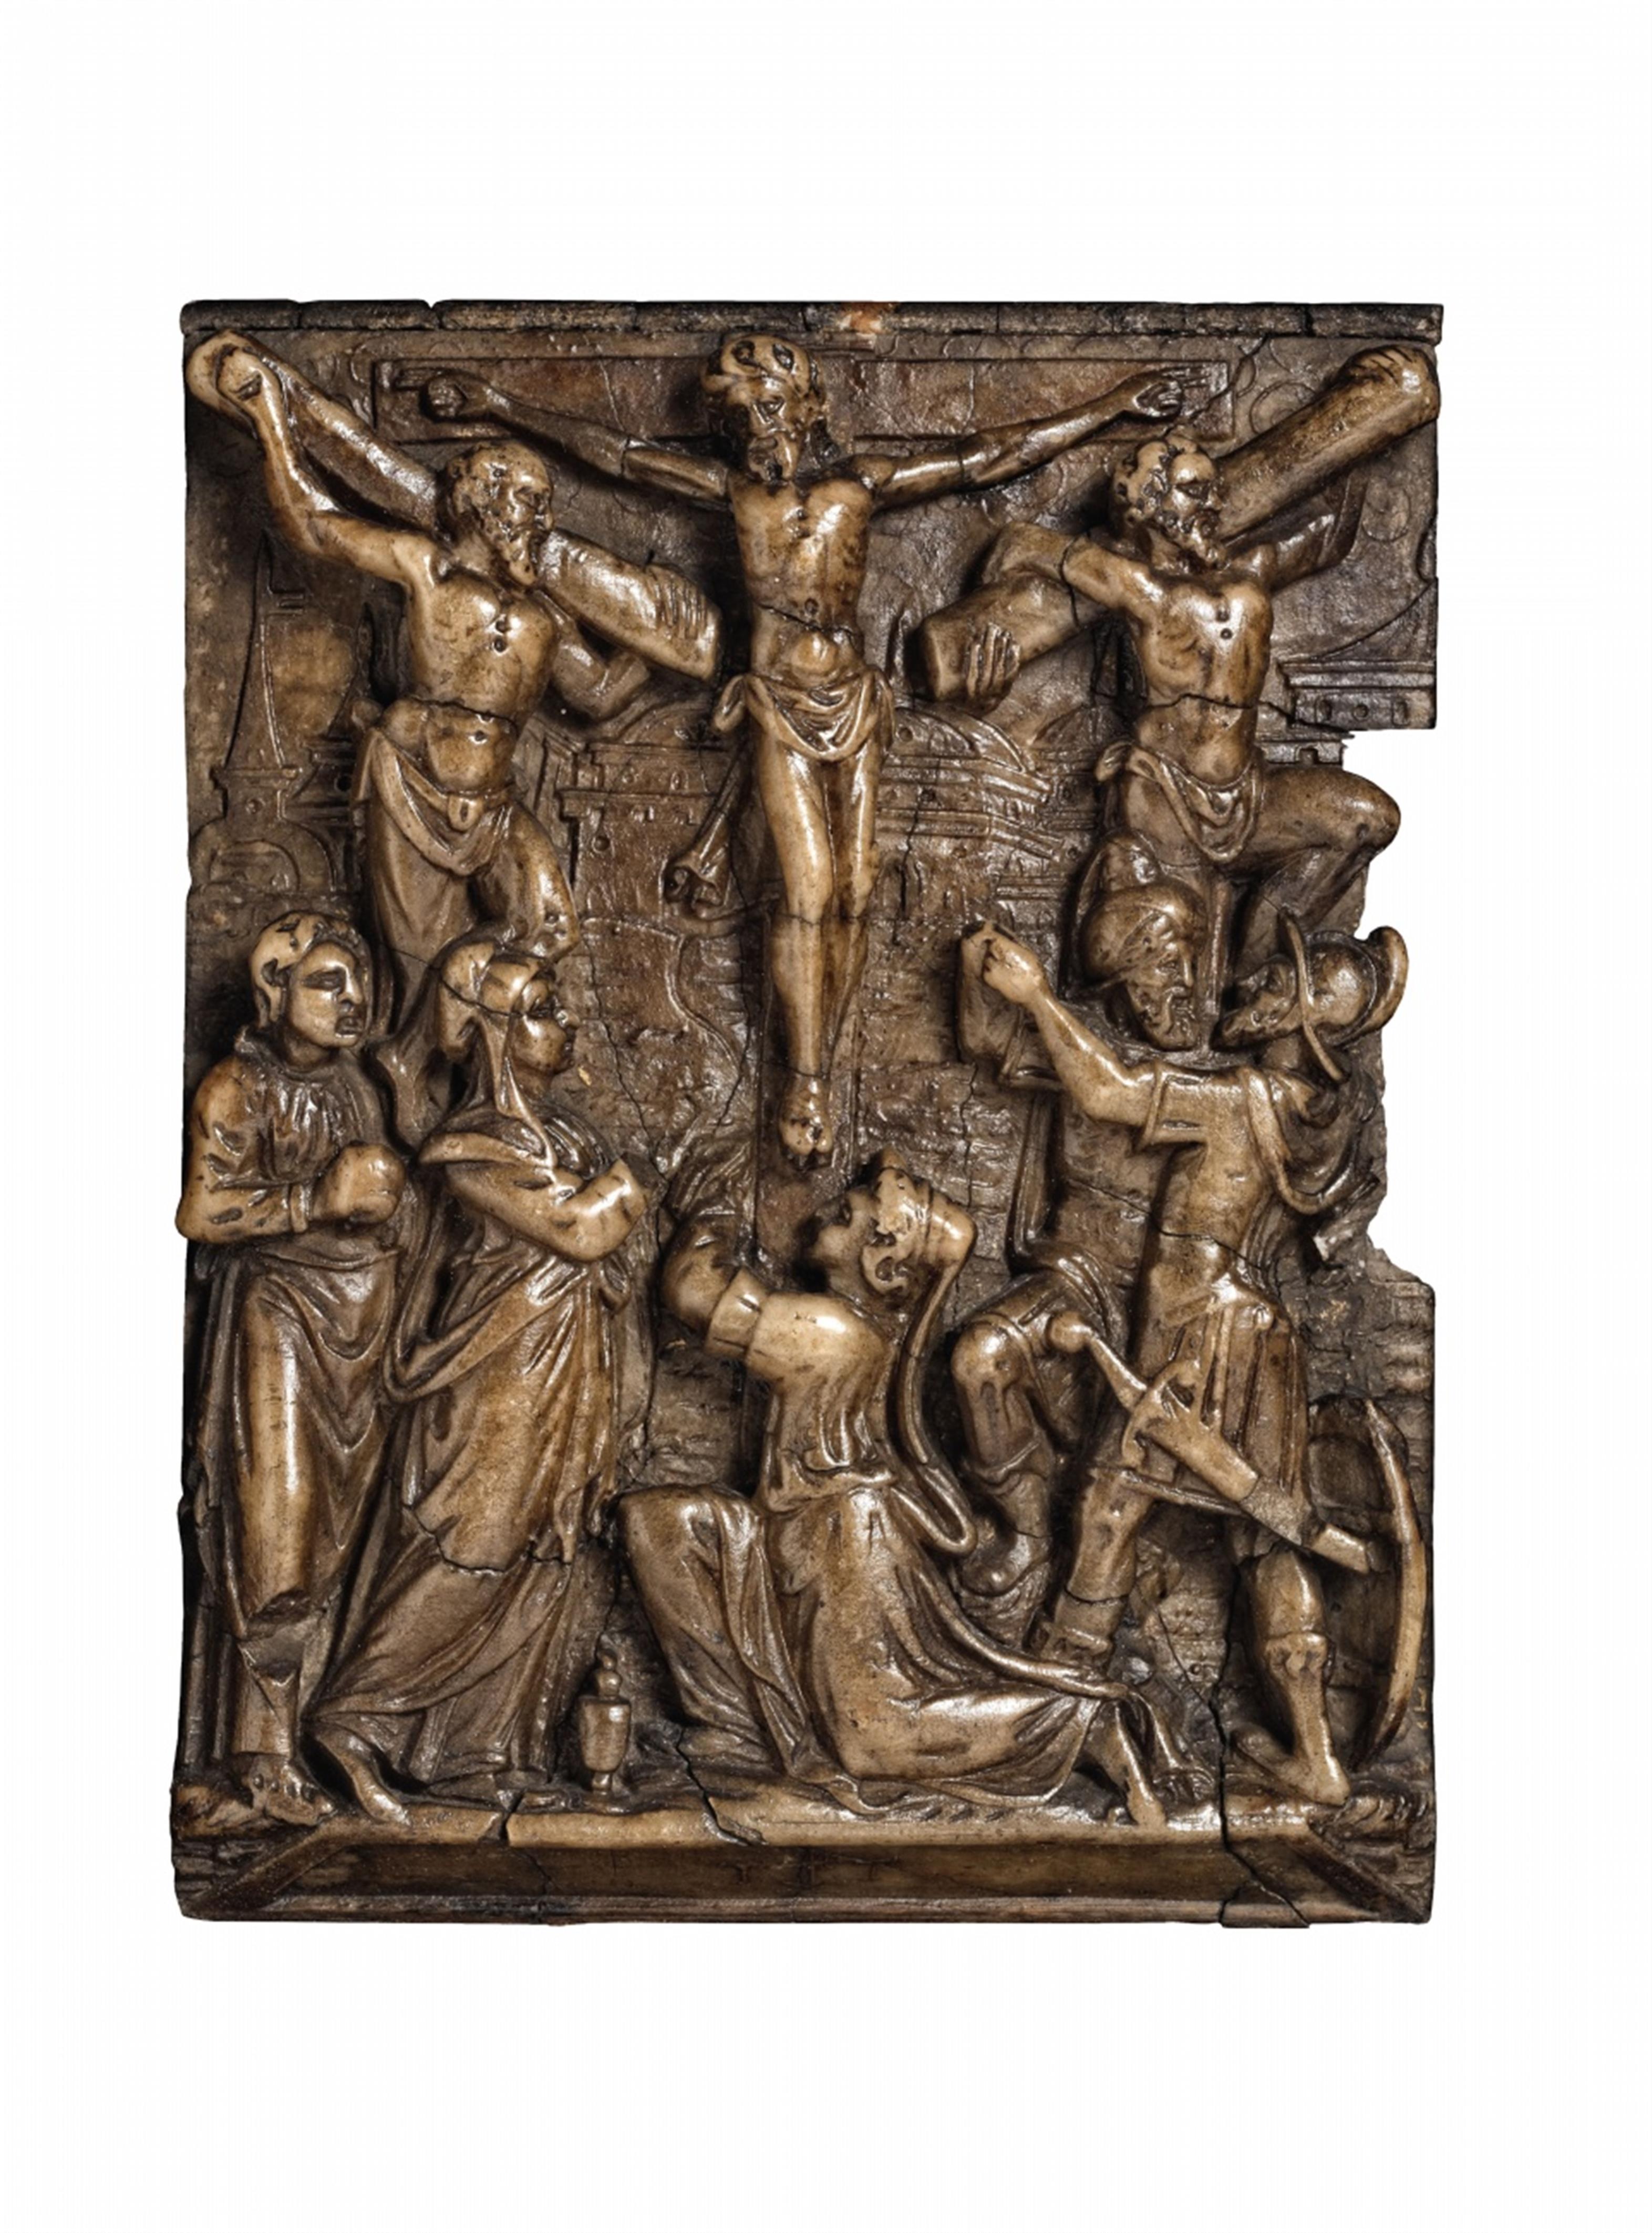 Wohl Mecheln um 1600 - Kreuzigung Christi - image-1